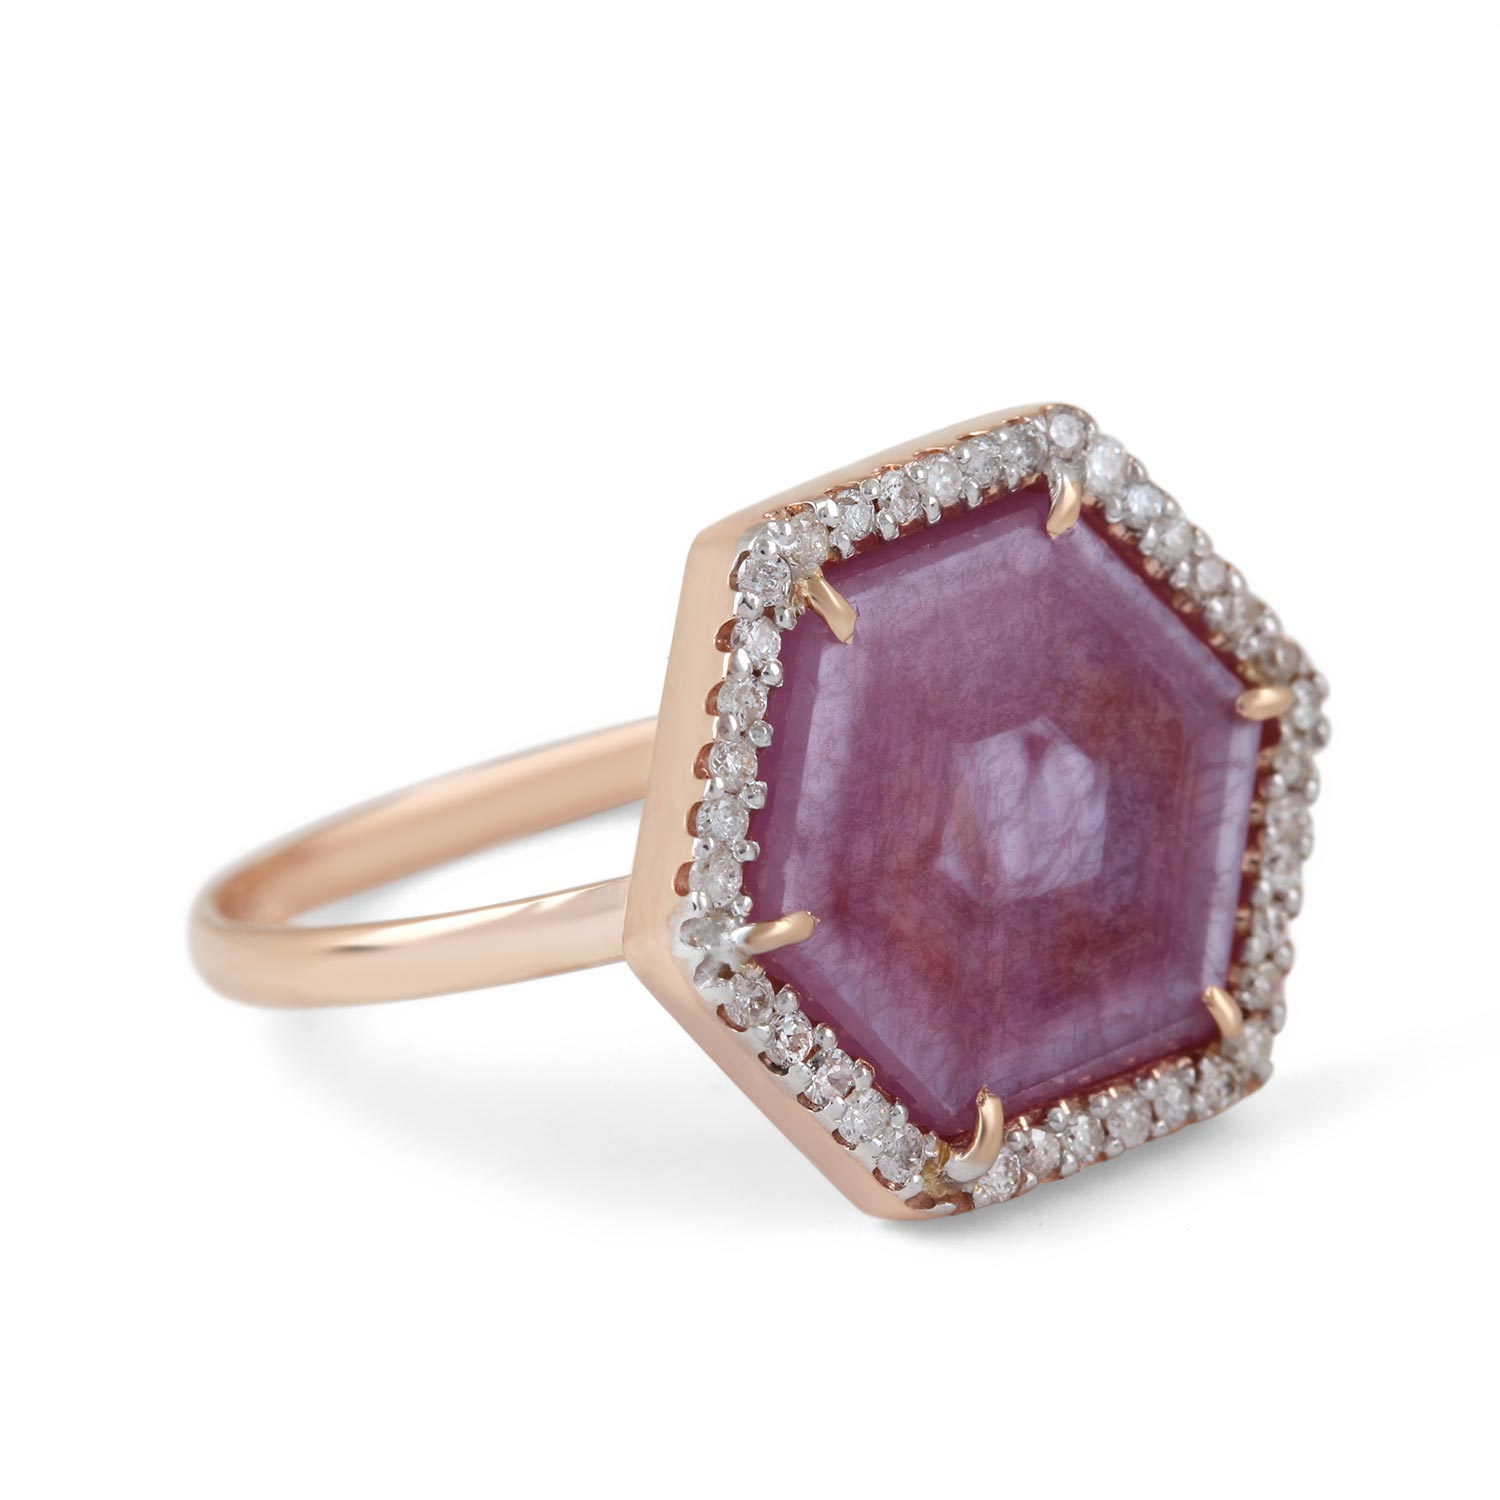 14K Solid Gold Pave Diamond Ring Pink Sapphire Gemstone Jewelry